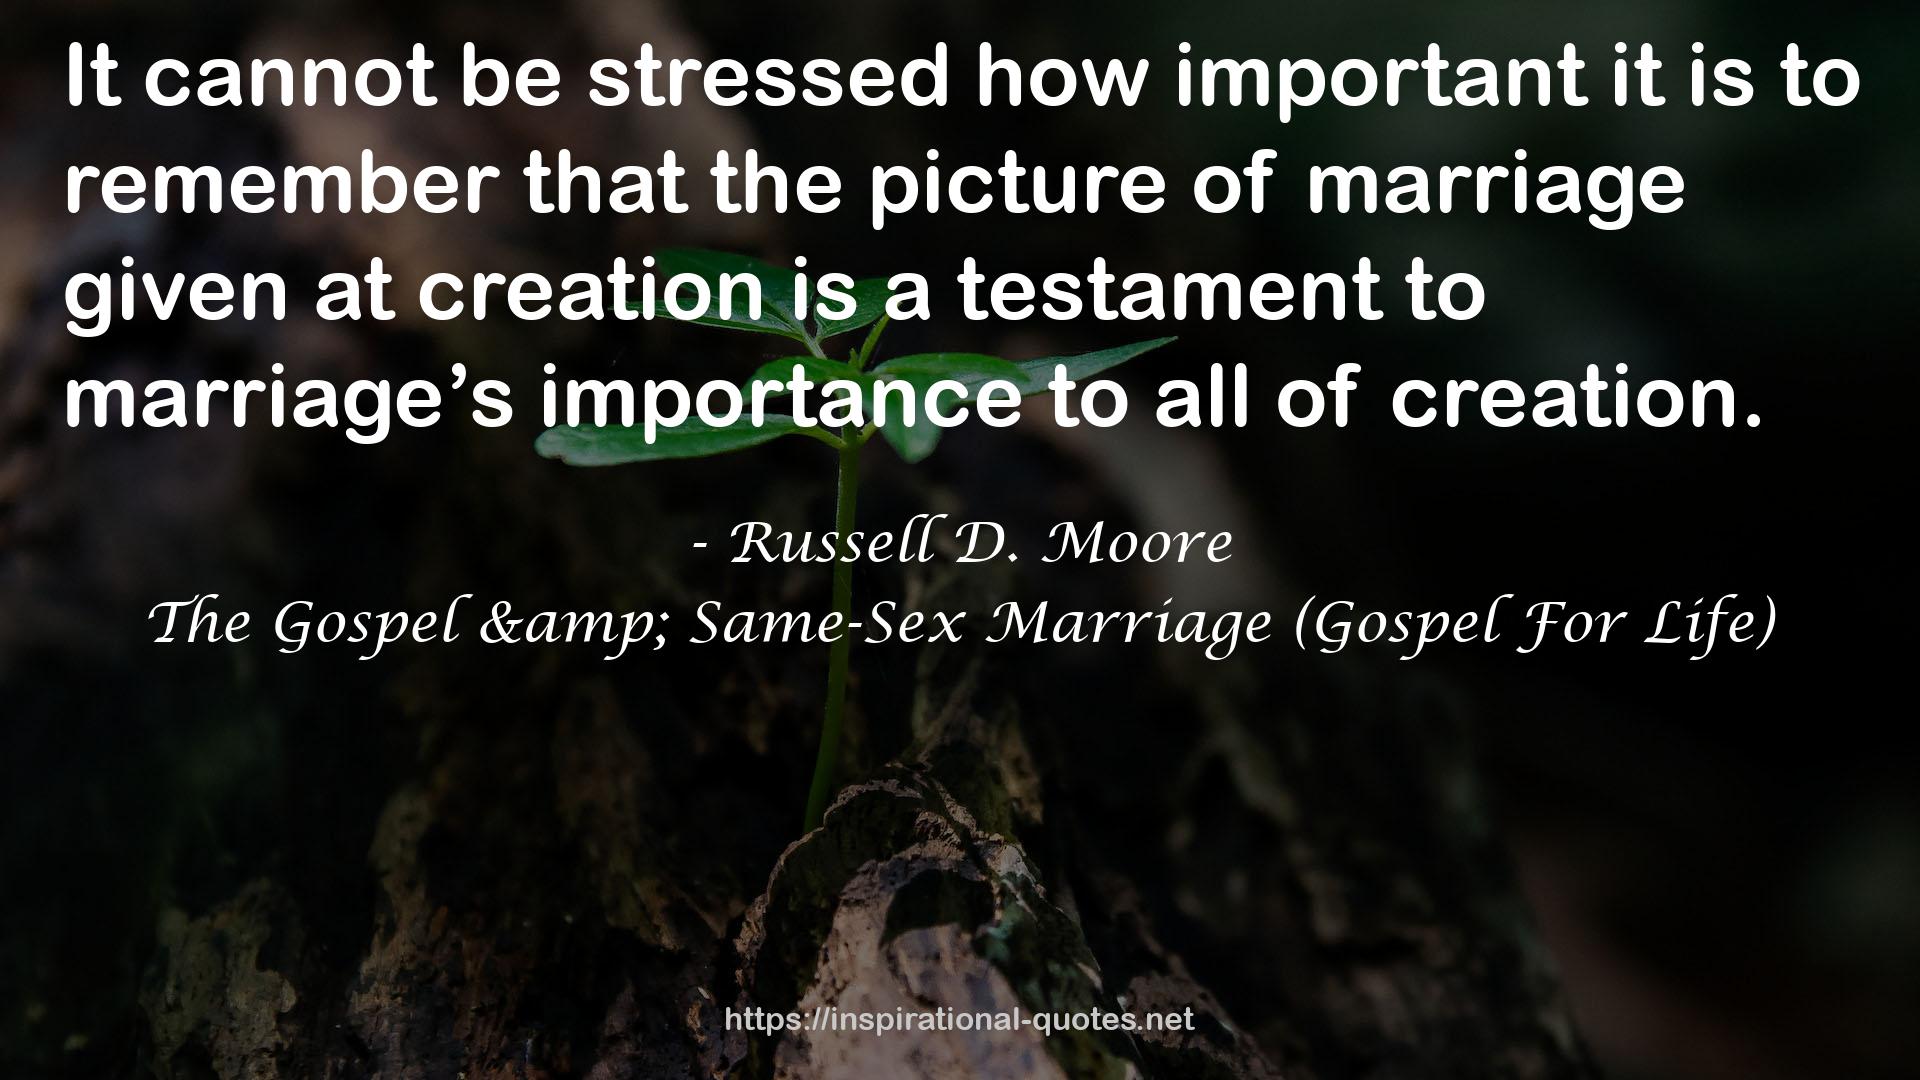 The Gospel & Same-Sex Marriage (Gospel For Life) QUOTES